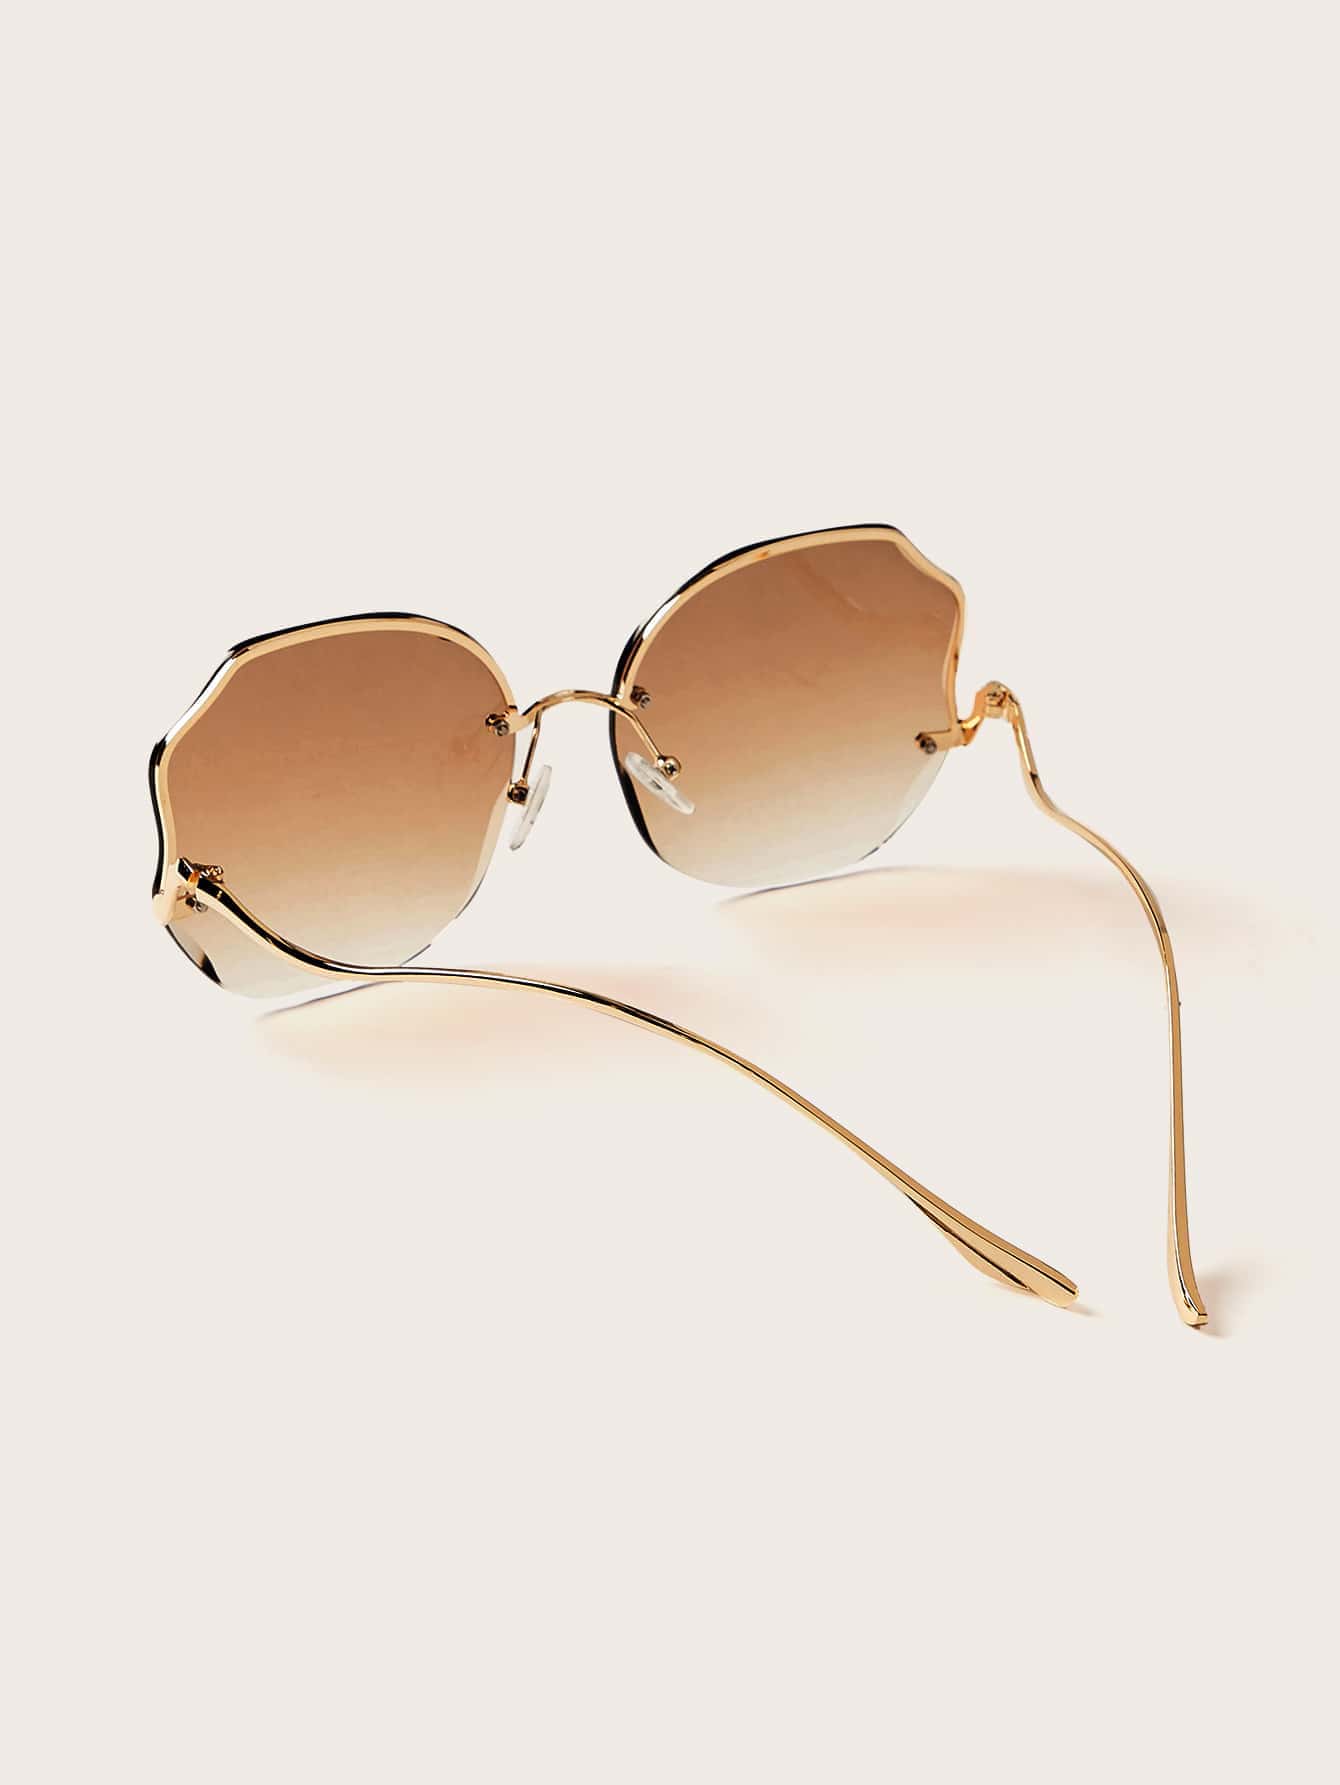 1 pair Rimless Fashion Sunglasses